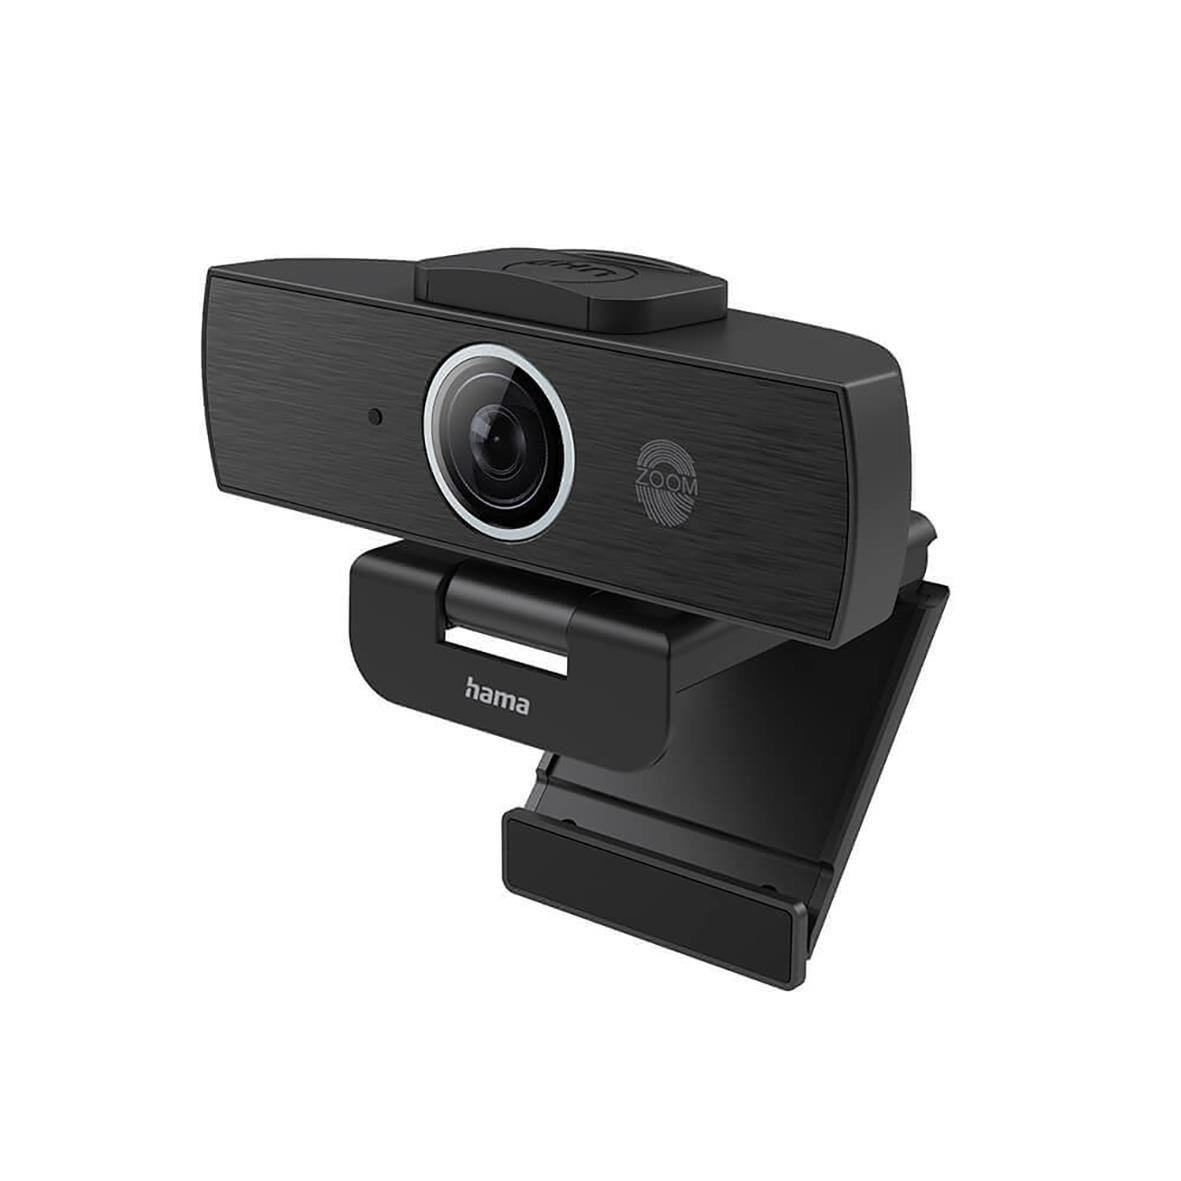 Webbkamera Hama C-900 Pro 216p 35033832_5